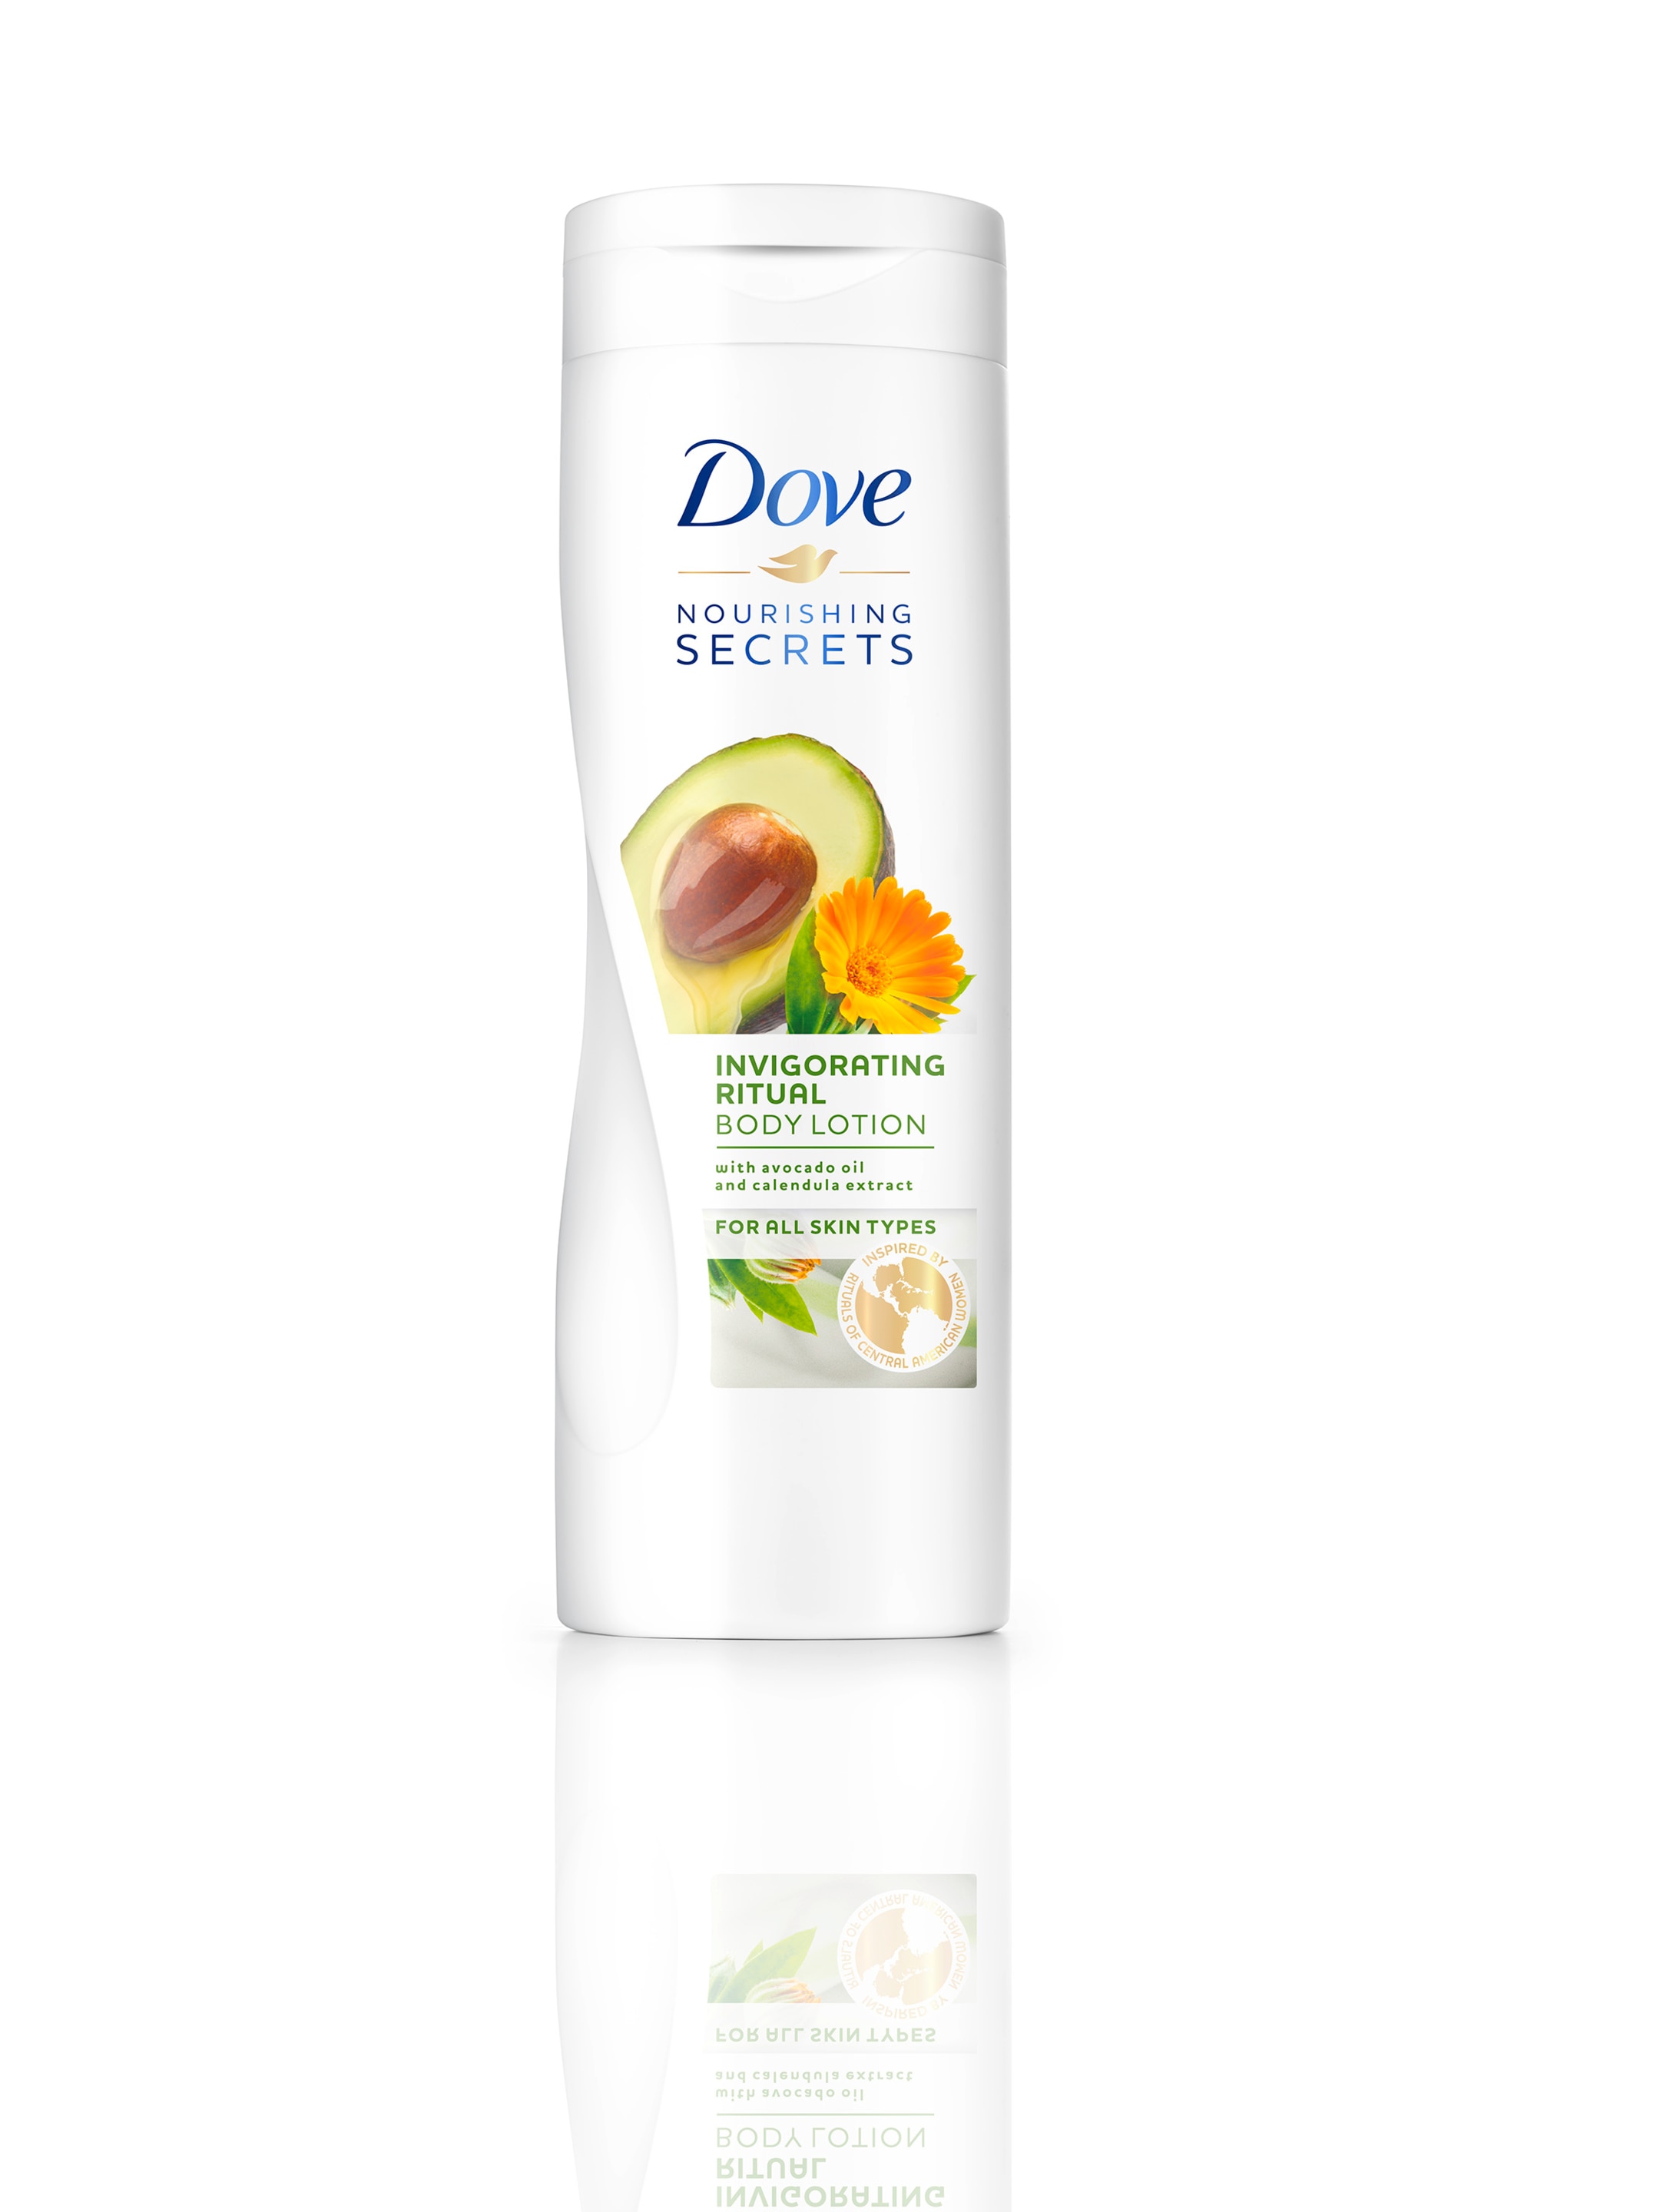 Dove Nourishing Secrets Lotion Invigorating Ritual- Avocado Oil and Calendula Extract 400ml